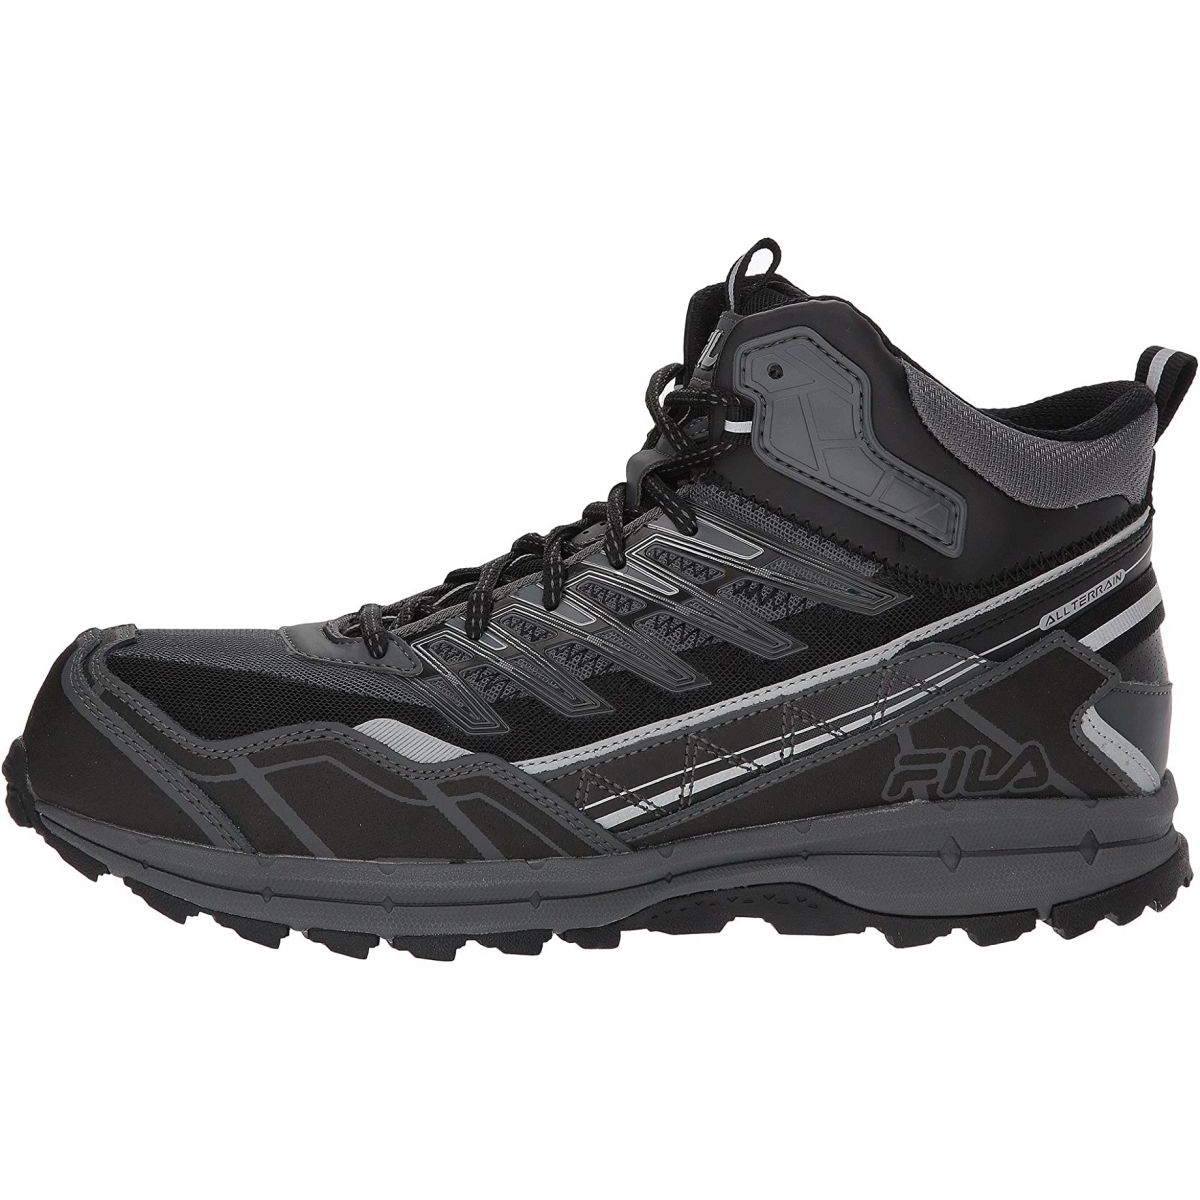 Fila Men's Hail Storm 3 Mid Composite Toe Trail Work Shoes Ct CSRK/BLK/MSIL - CSRK/BLK/MSIL, 7